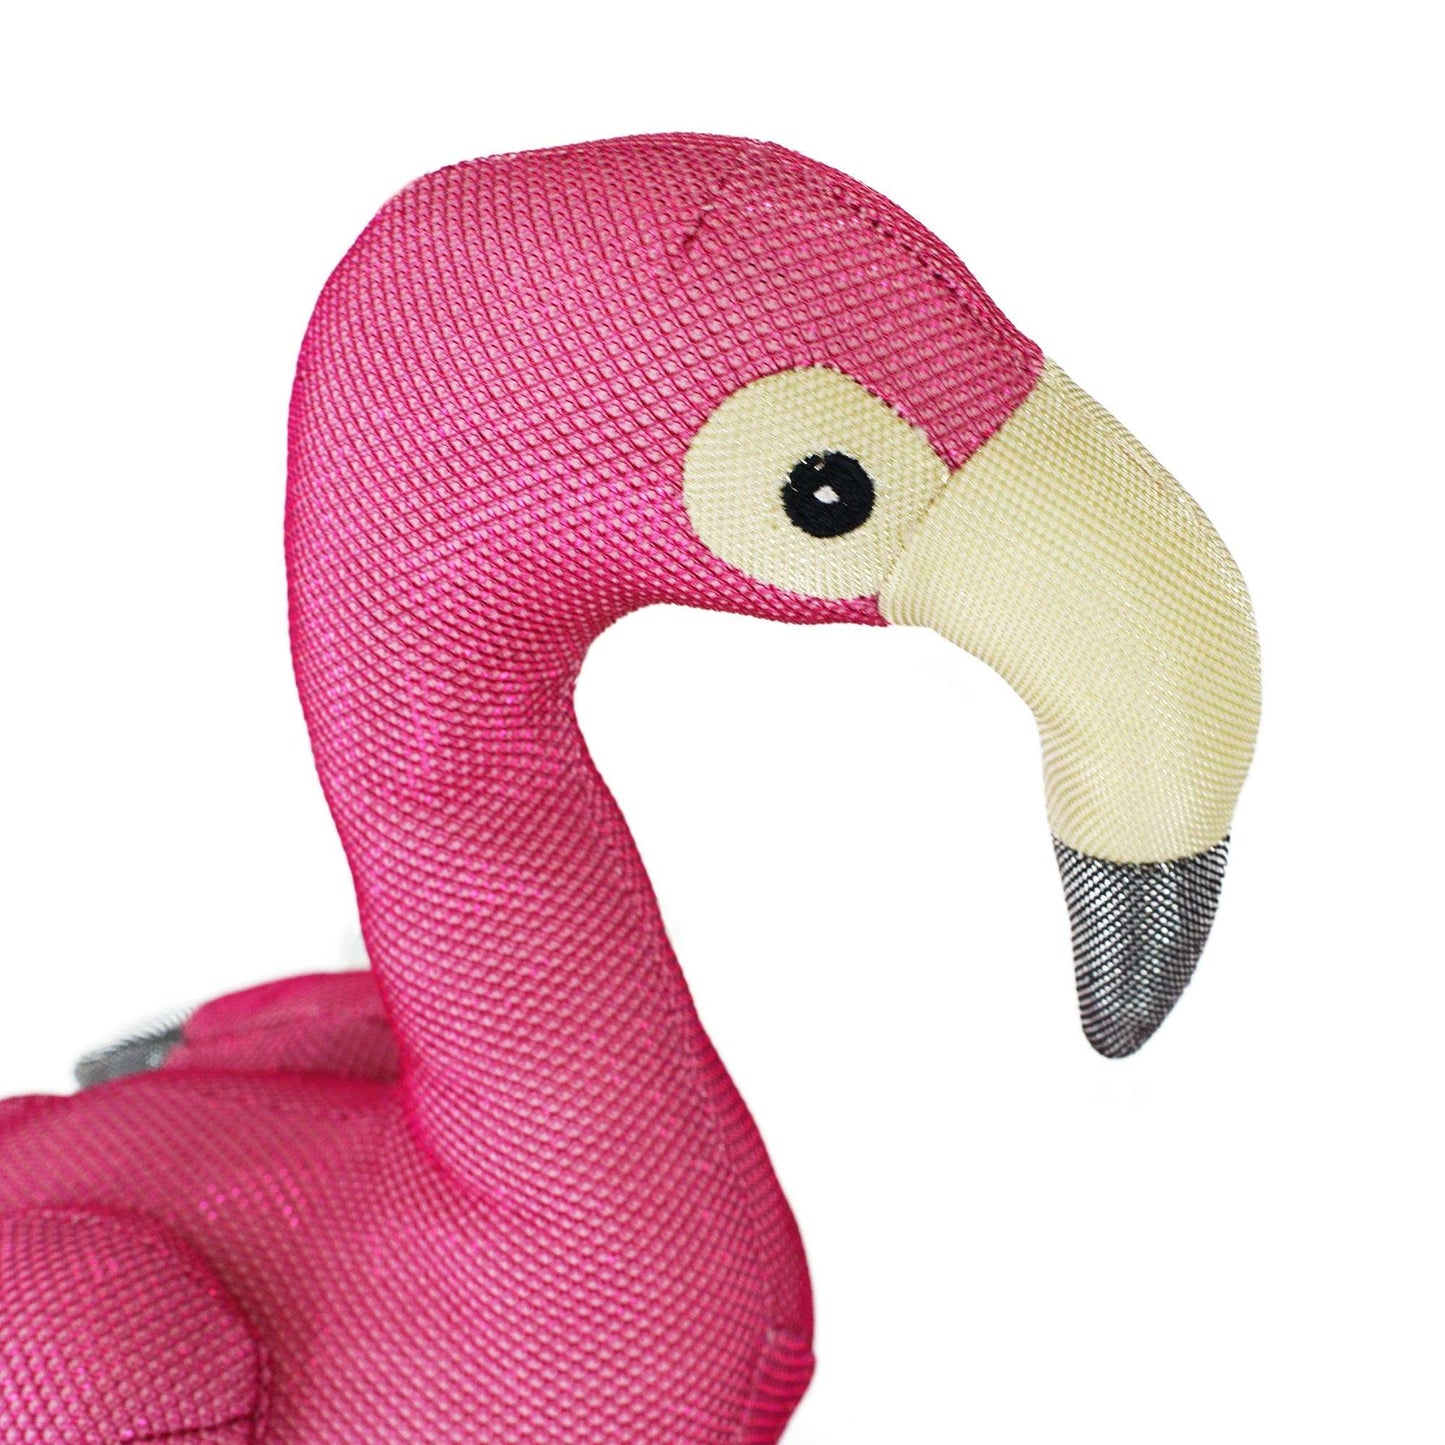 Huge beak dark flamingo stuffed animal PlushThis